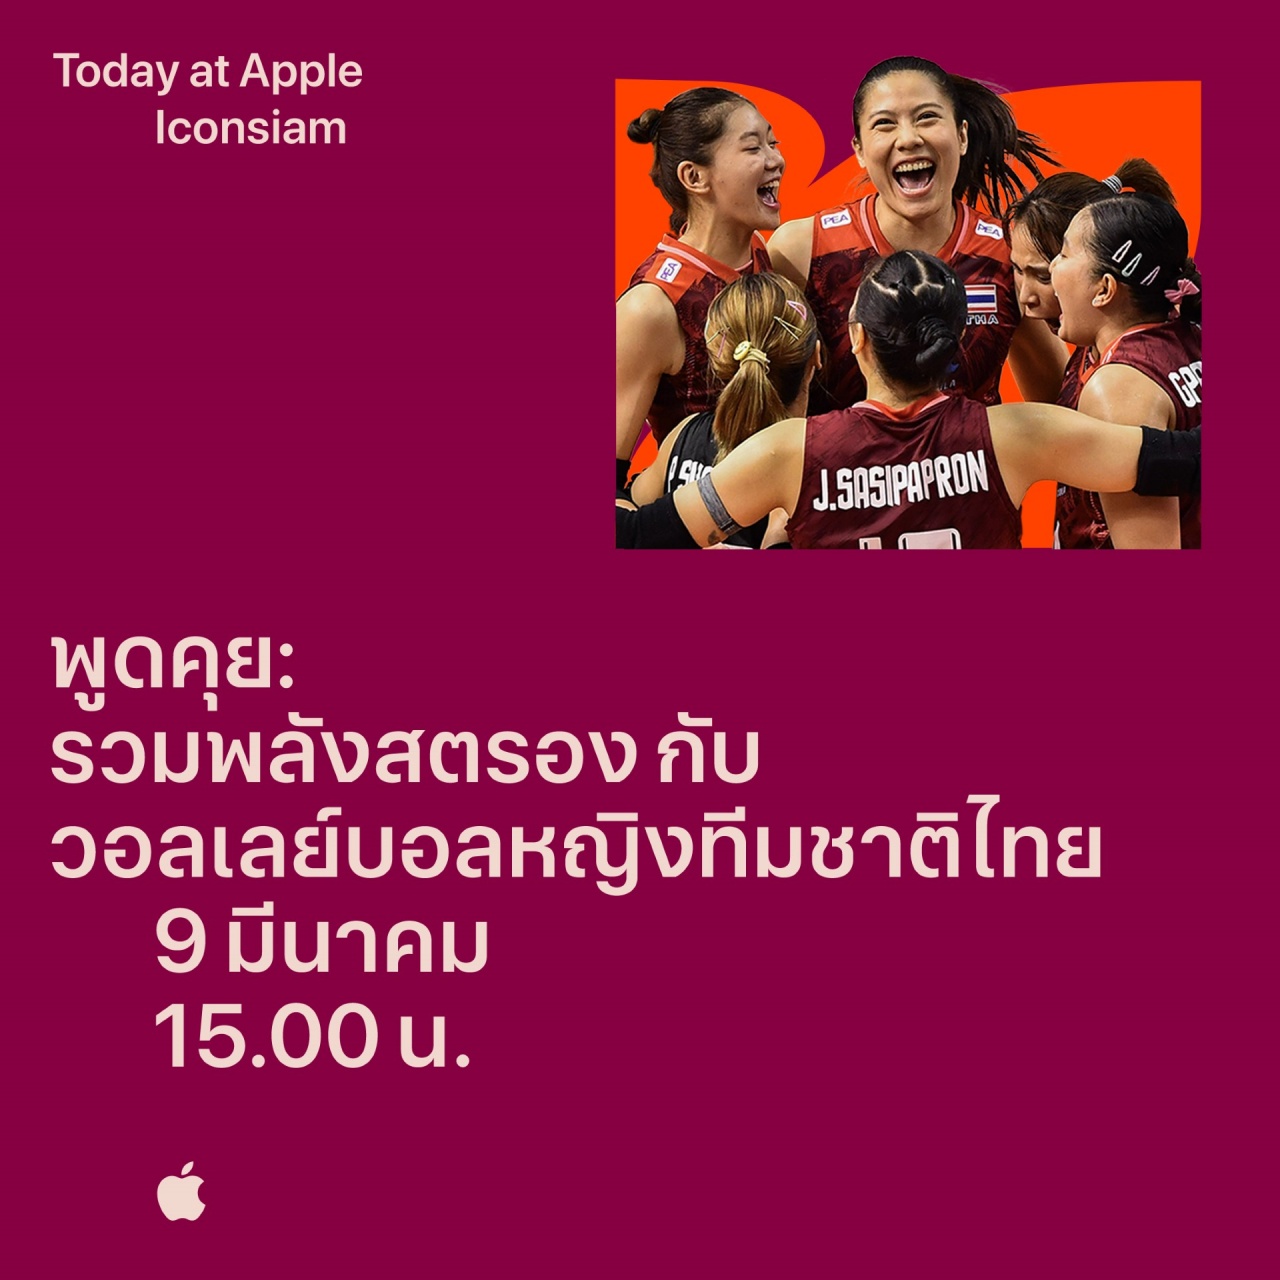 Apple Iconsiam เชิญนักตบลูกยางหญิงทีมชาติไทยร่วมฉลองวันสตรีสากล